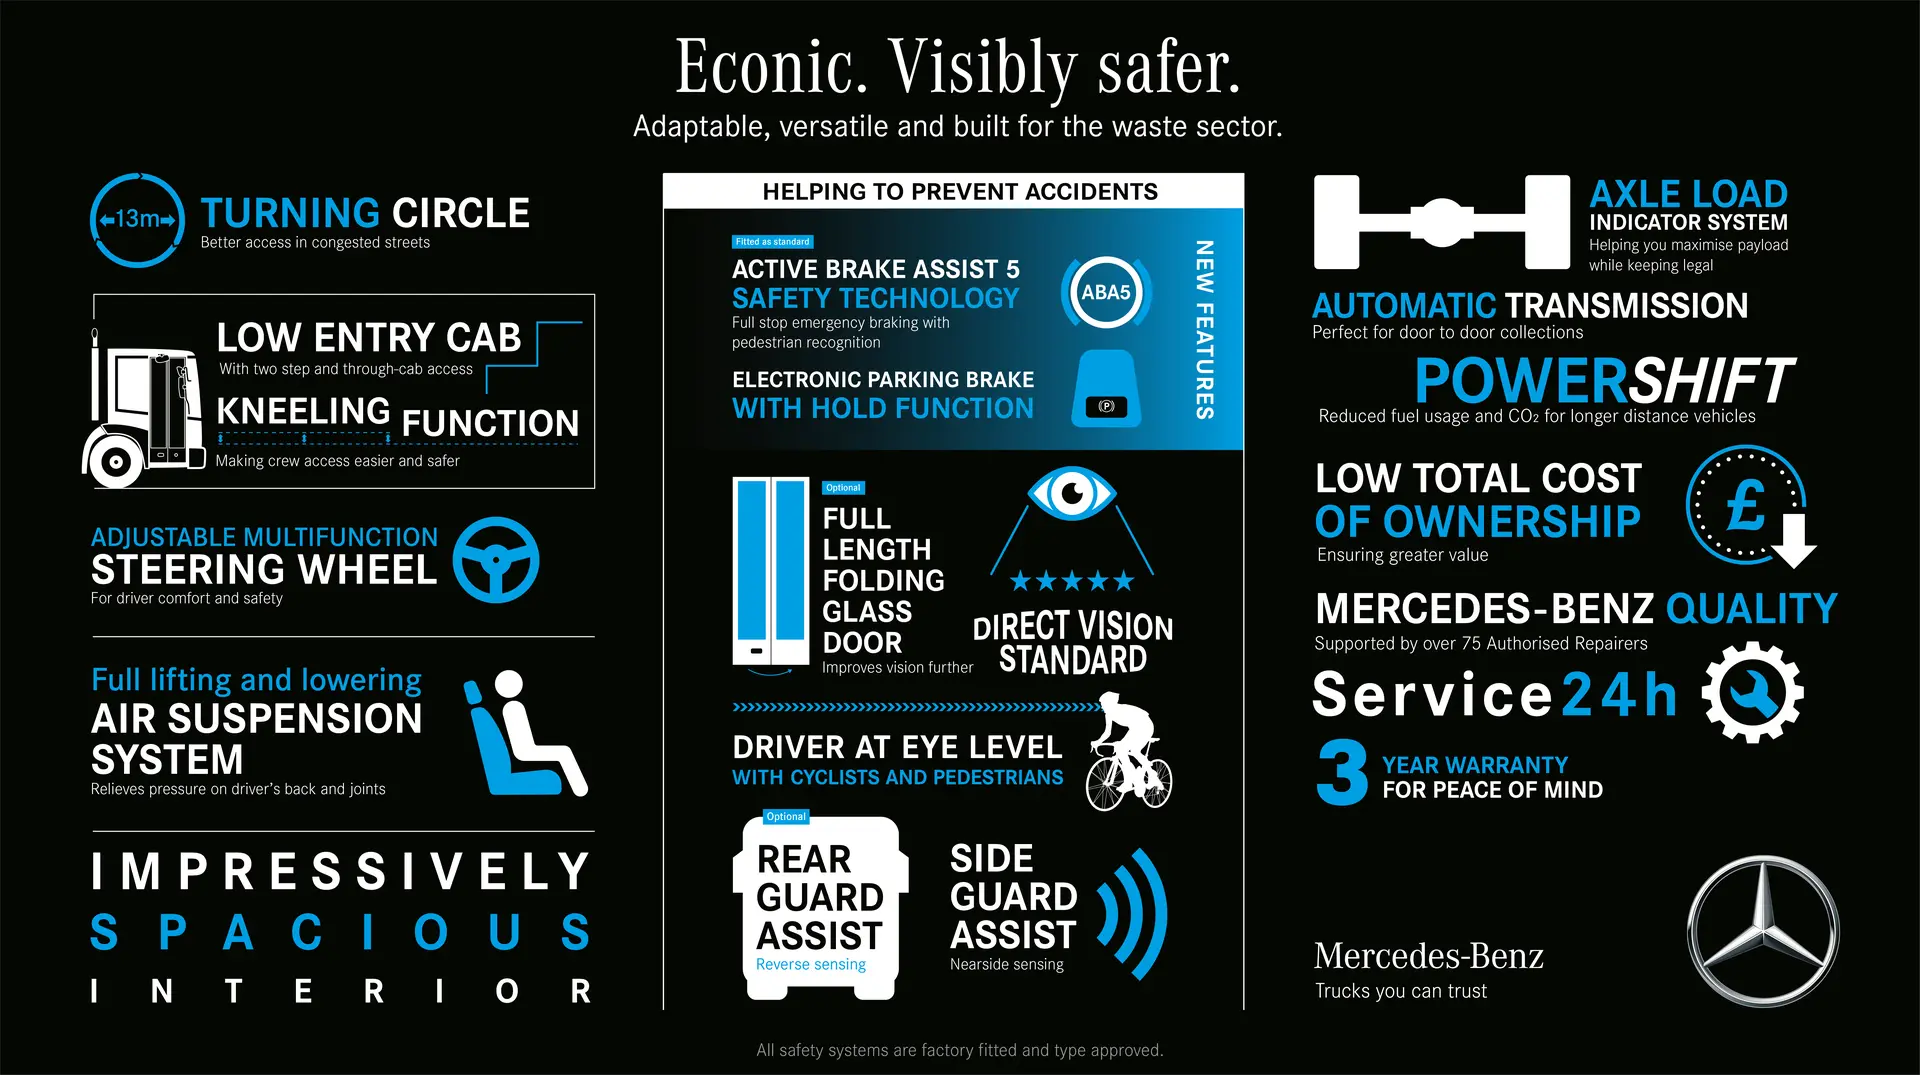 MA29124 Econic Safest Truck Infographic 1920x1080px v07